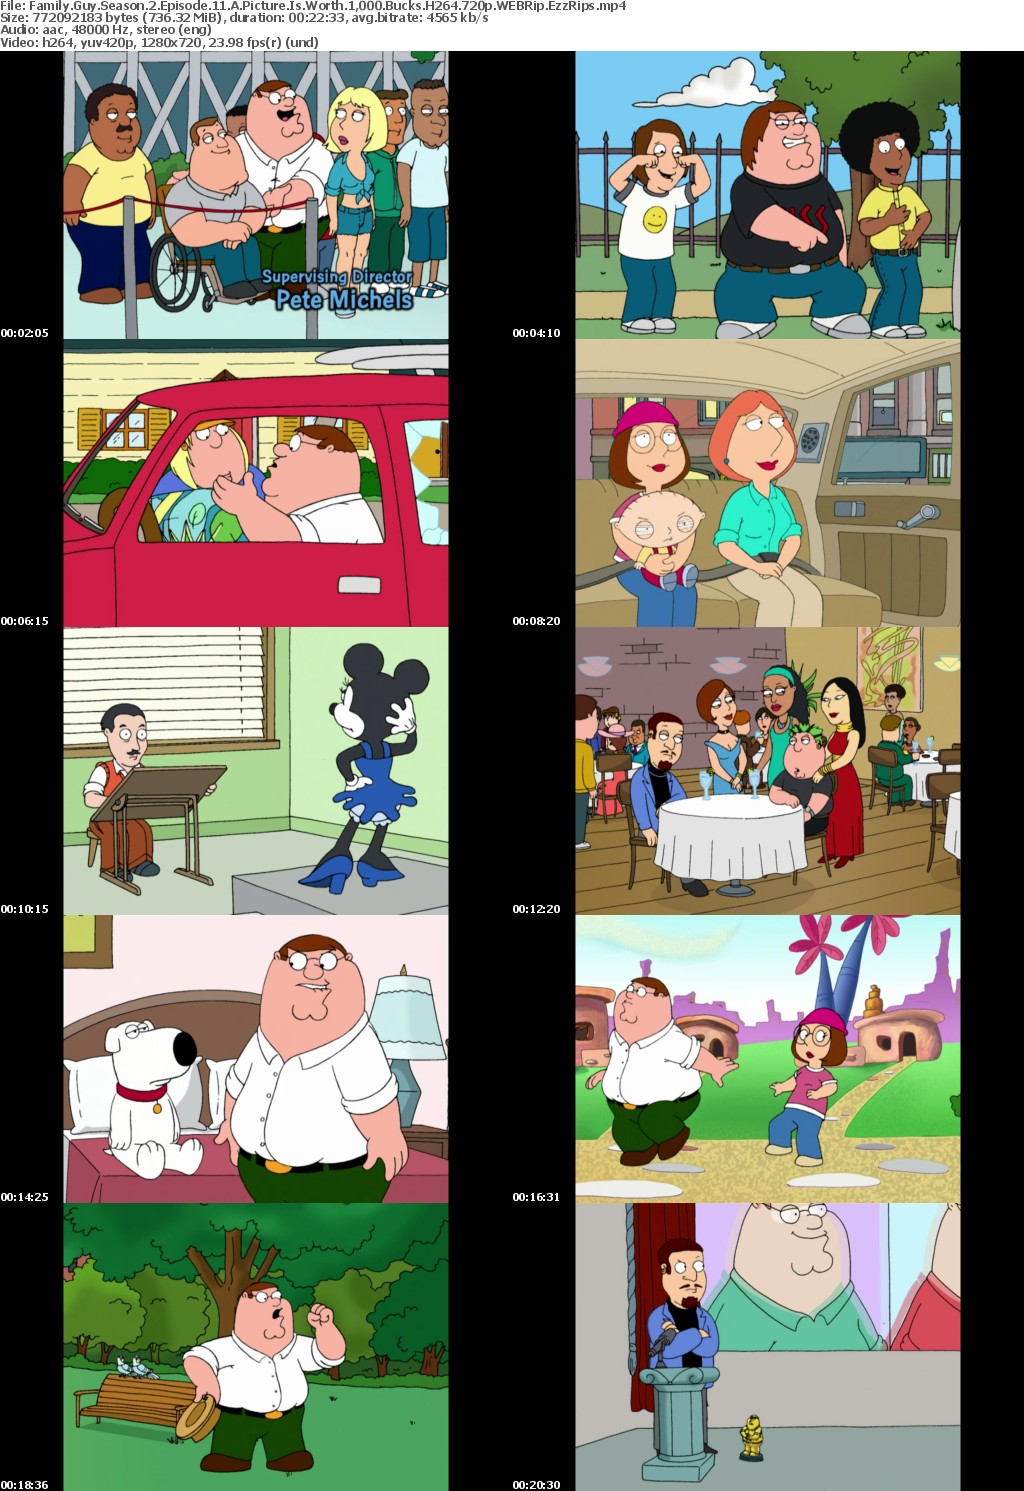 Family Guy Season 2 Episode 11 A Picture Is Worth 1,000 Bucks H264 720p WEBRip EzzRips